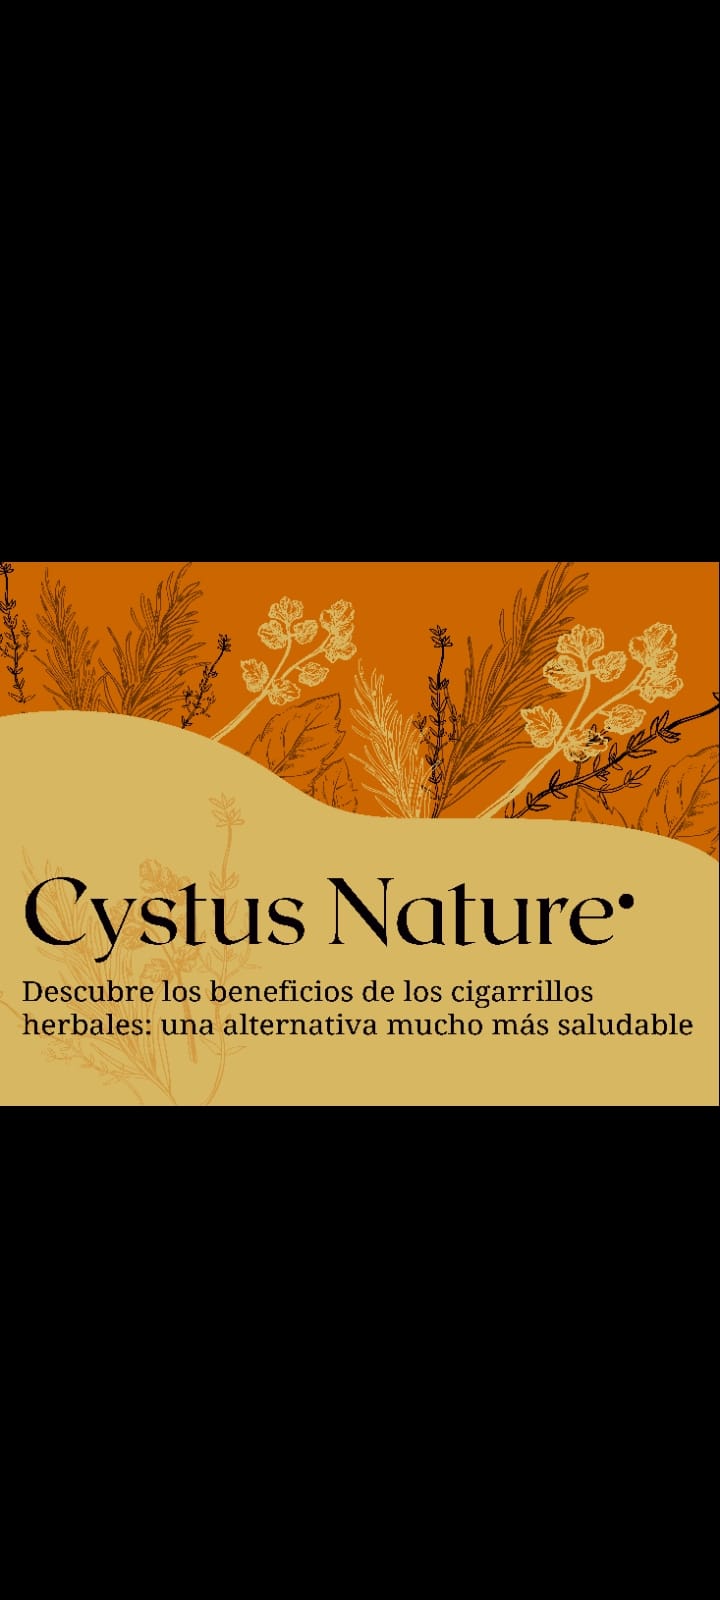 Images Cystus Nature